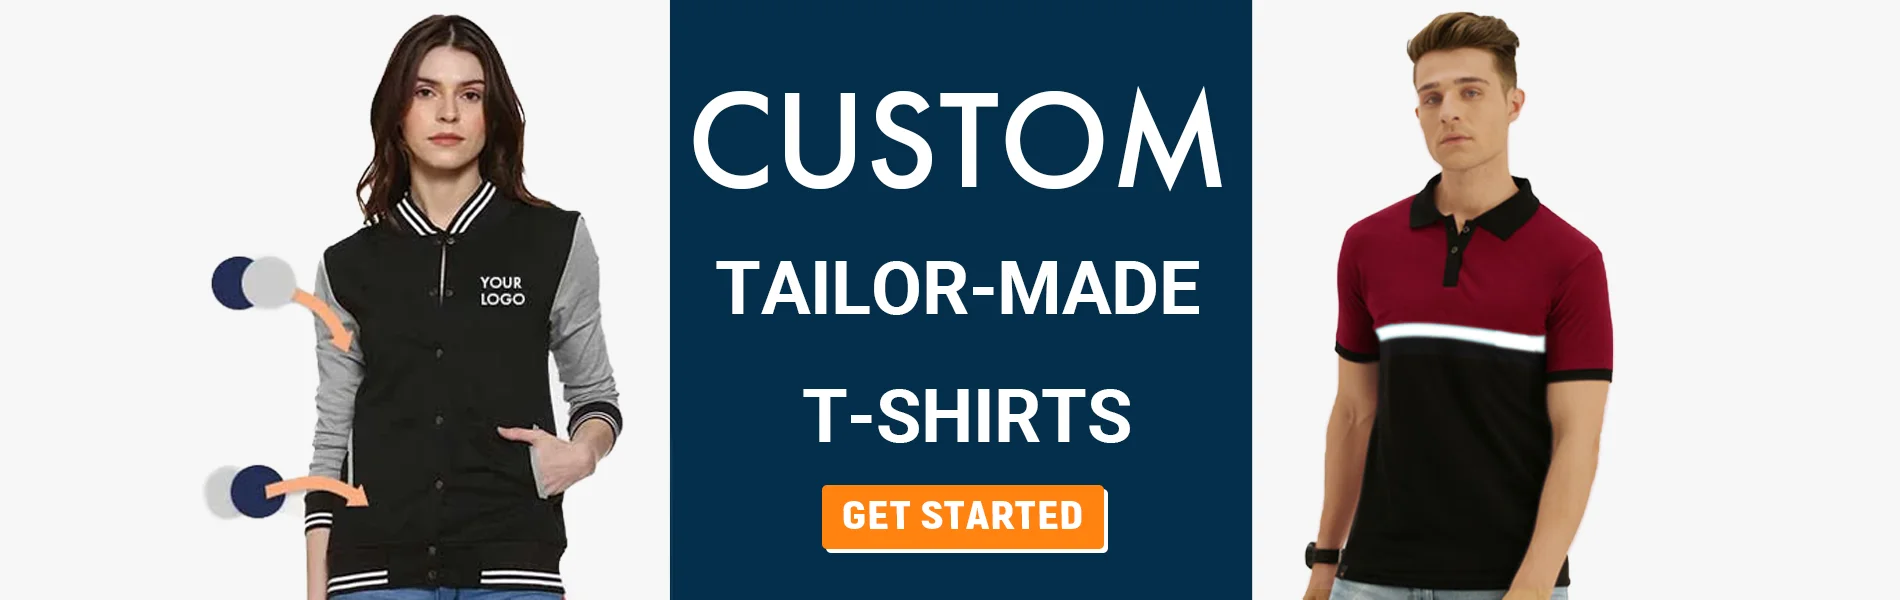 custom tailormade t-shirts pune